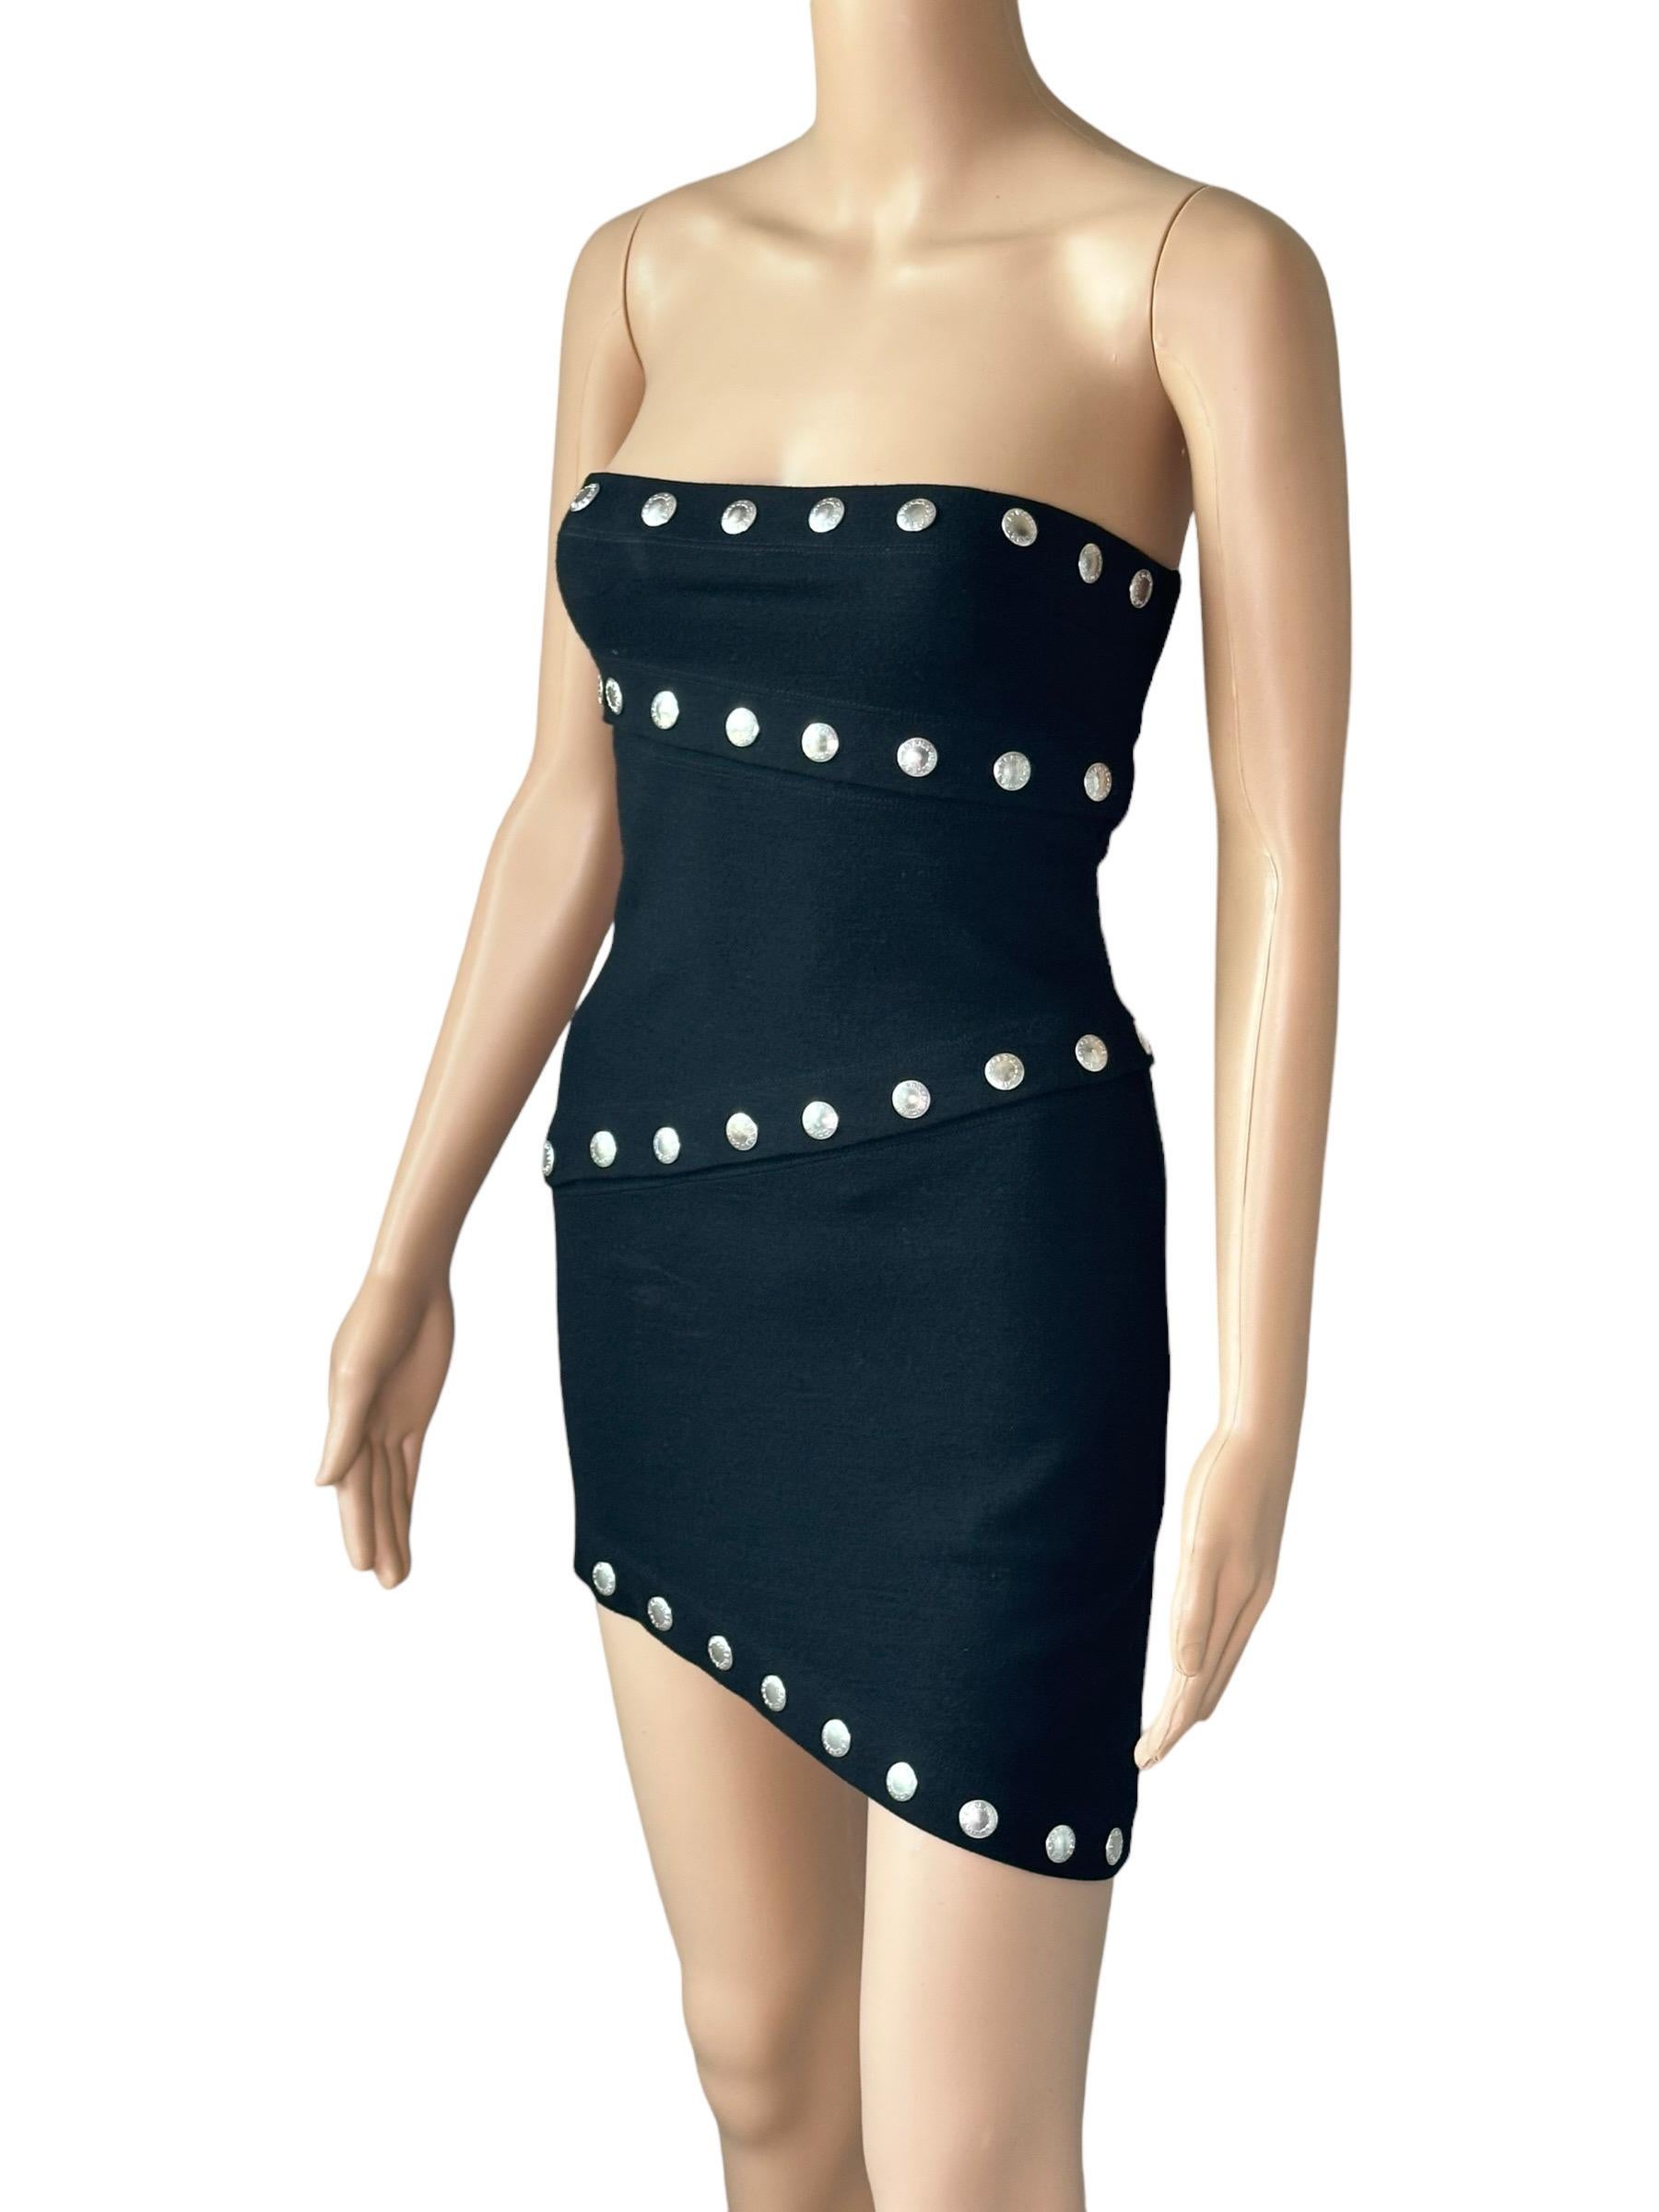 Dolce & Gabbana F/W 2003 Runway Cutout Snap-Up Convertible Knit Black Dress For Sale 11